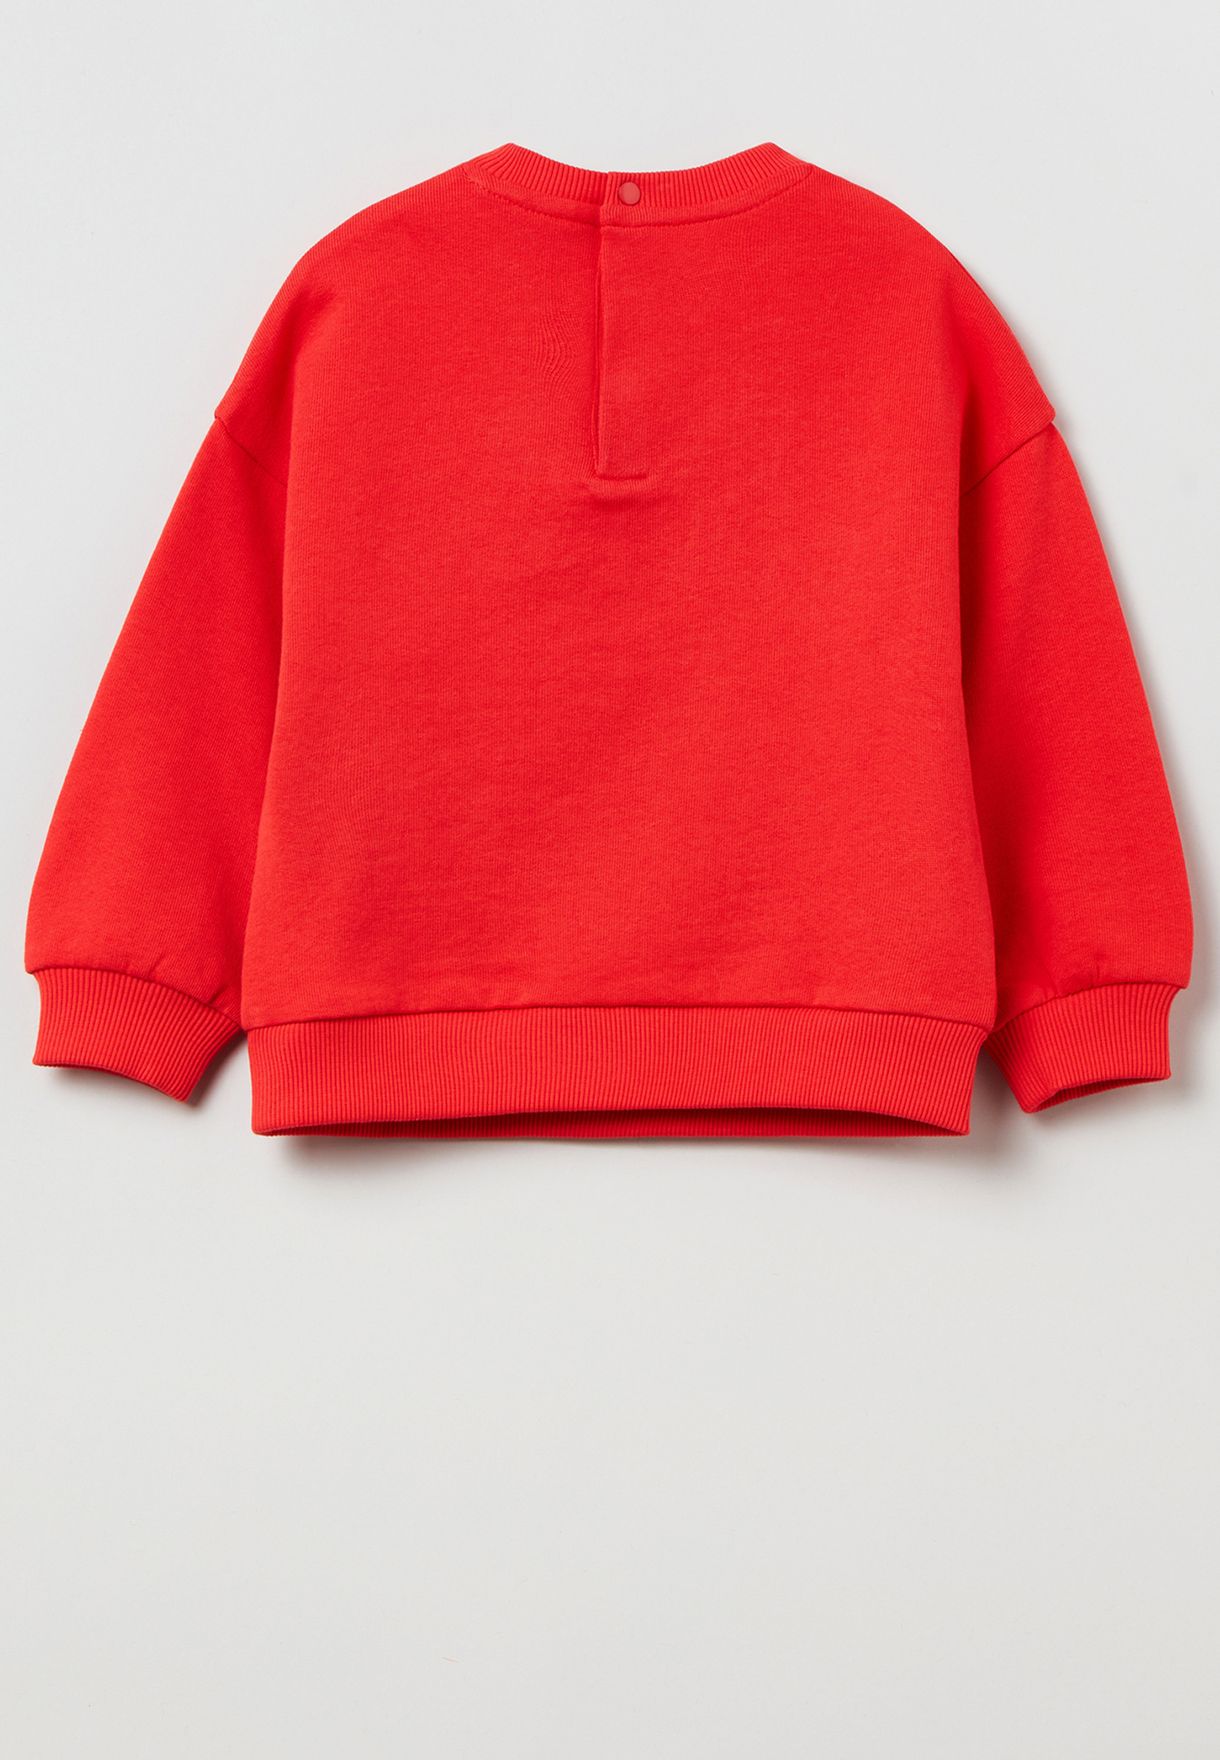 Infant Essential Sweatshirt